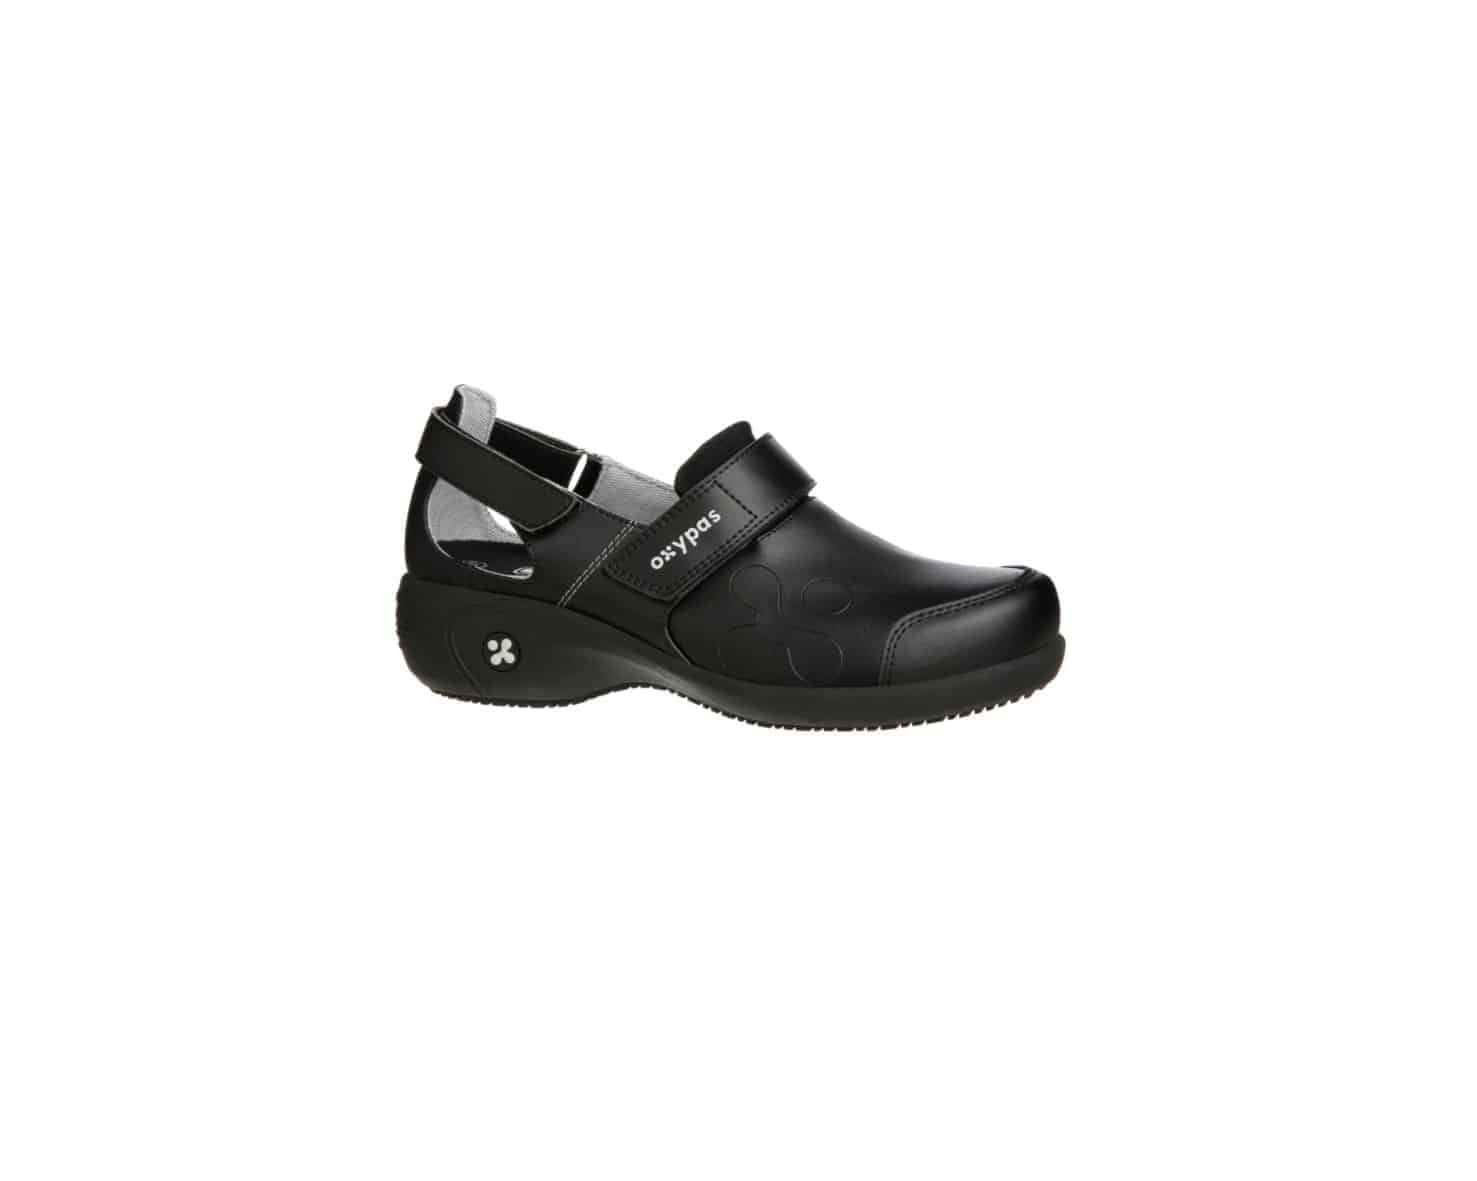 Antistatic Leather Nursing Shoes with Coolmax Lining,3.5 UK Oxypas Move Nelie Slip-resistant 36 EU